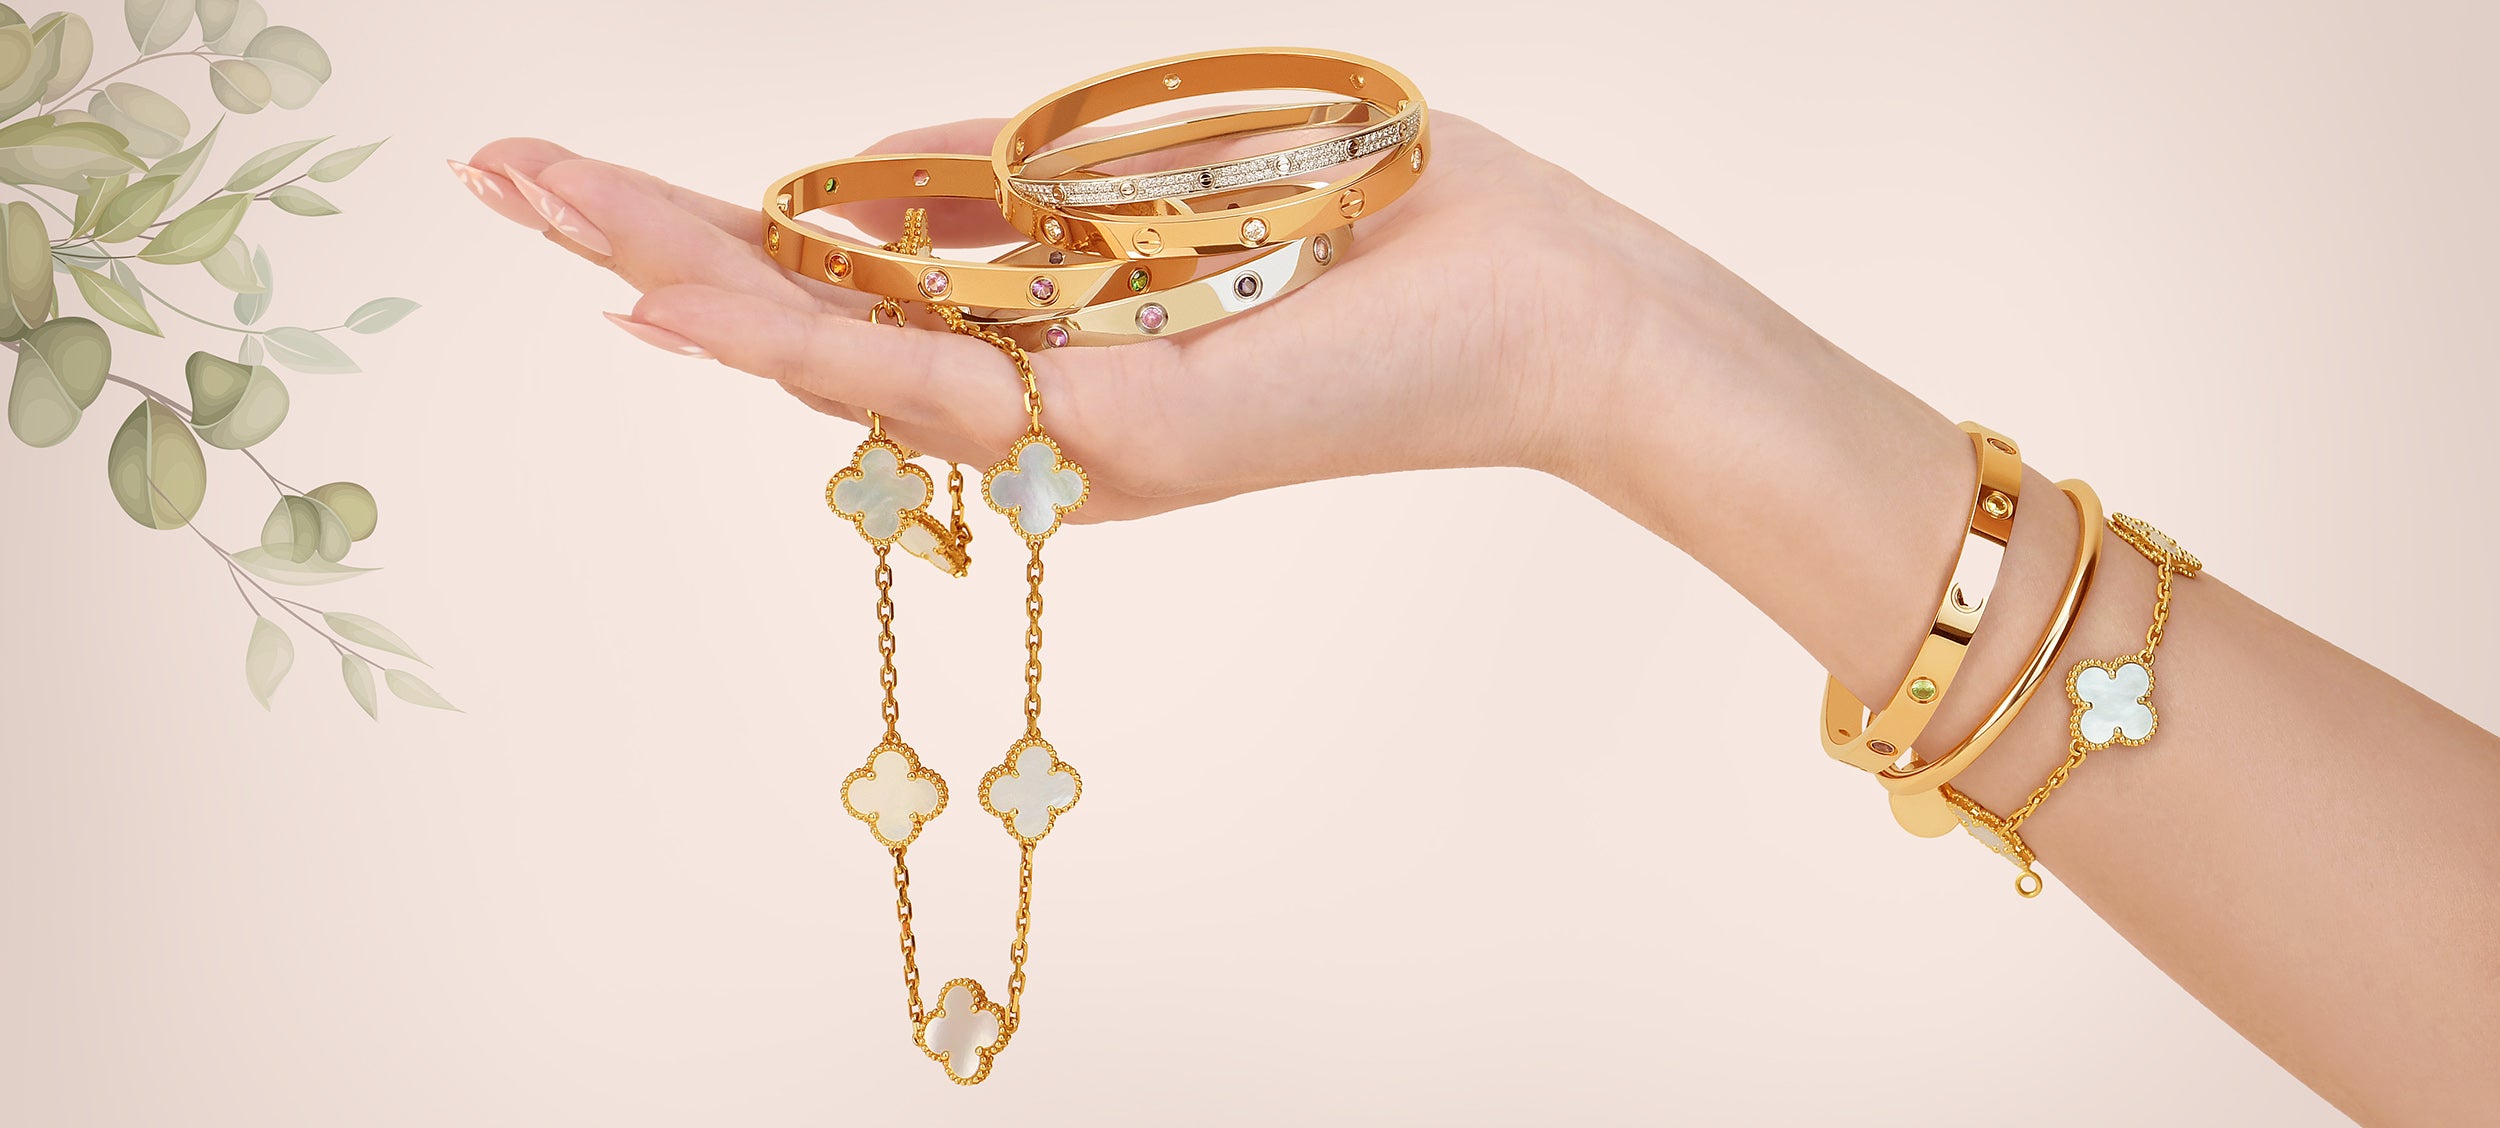 cartier #cartierlovebracelet #vancleef  Cartier jewelry, Love bracelets,  Stacked jewelry